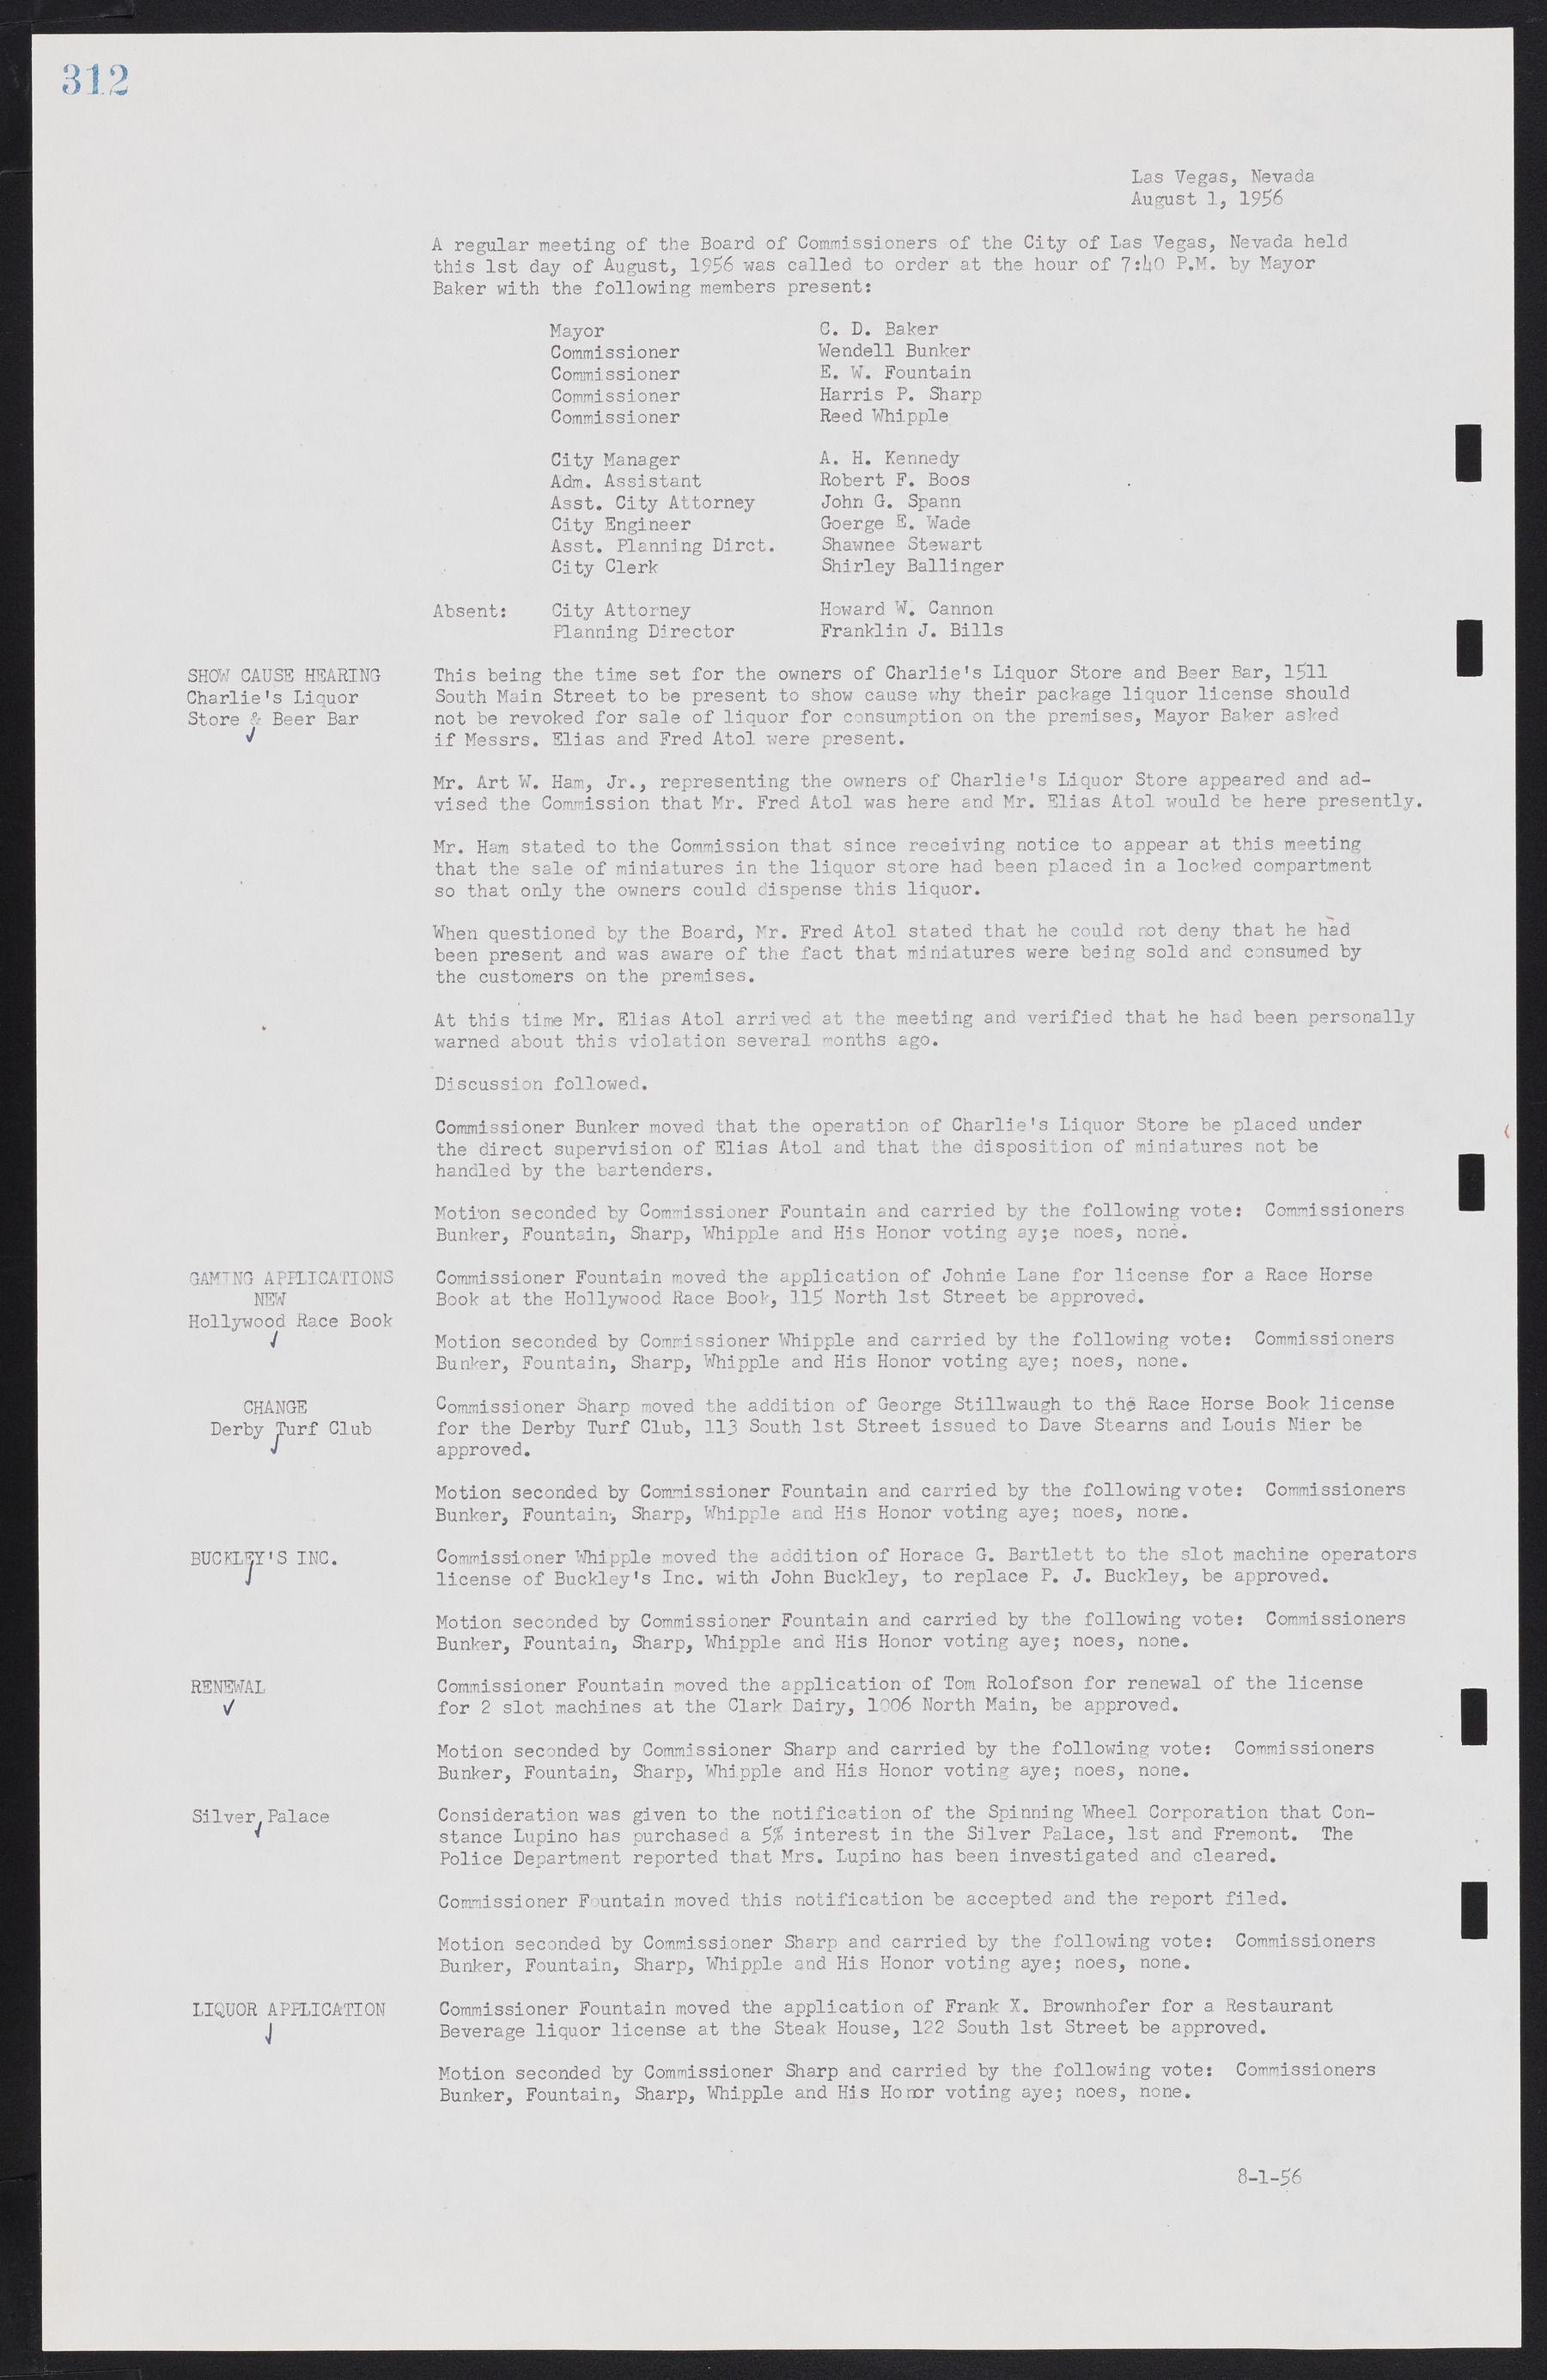 Las Vegas City Commission Minutes, September 21, 1955 to November 20, 1957, lvc000010-332